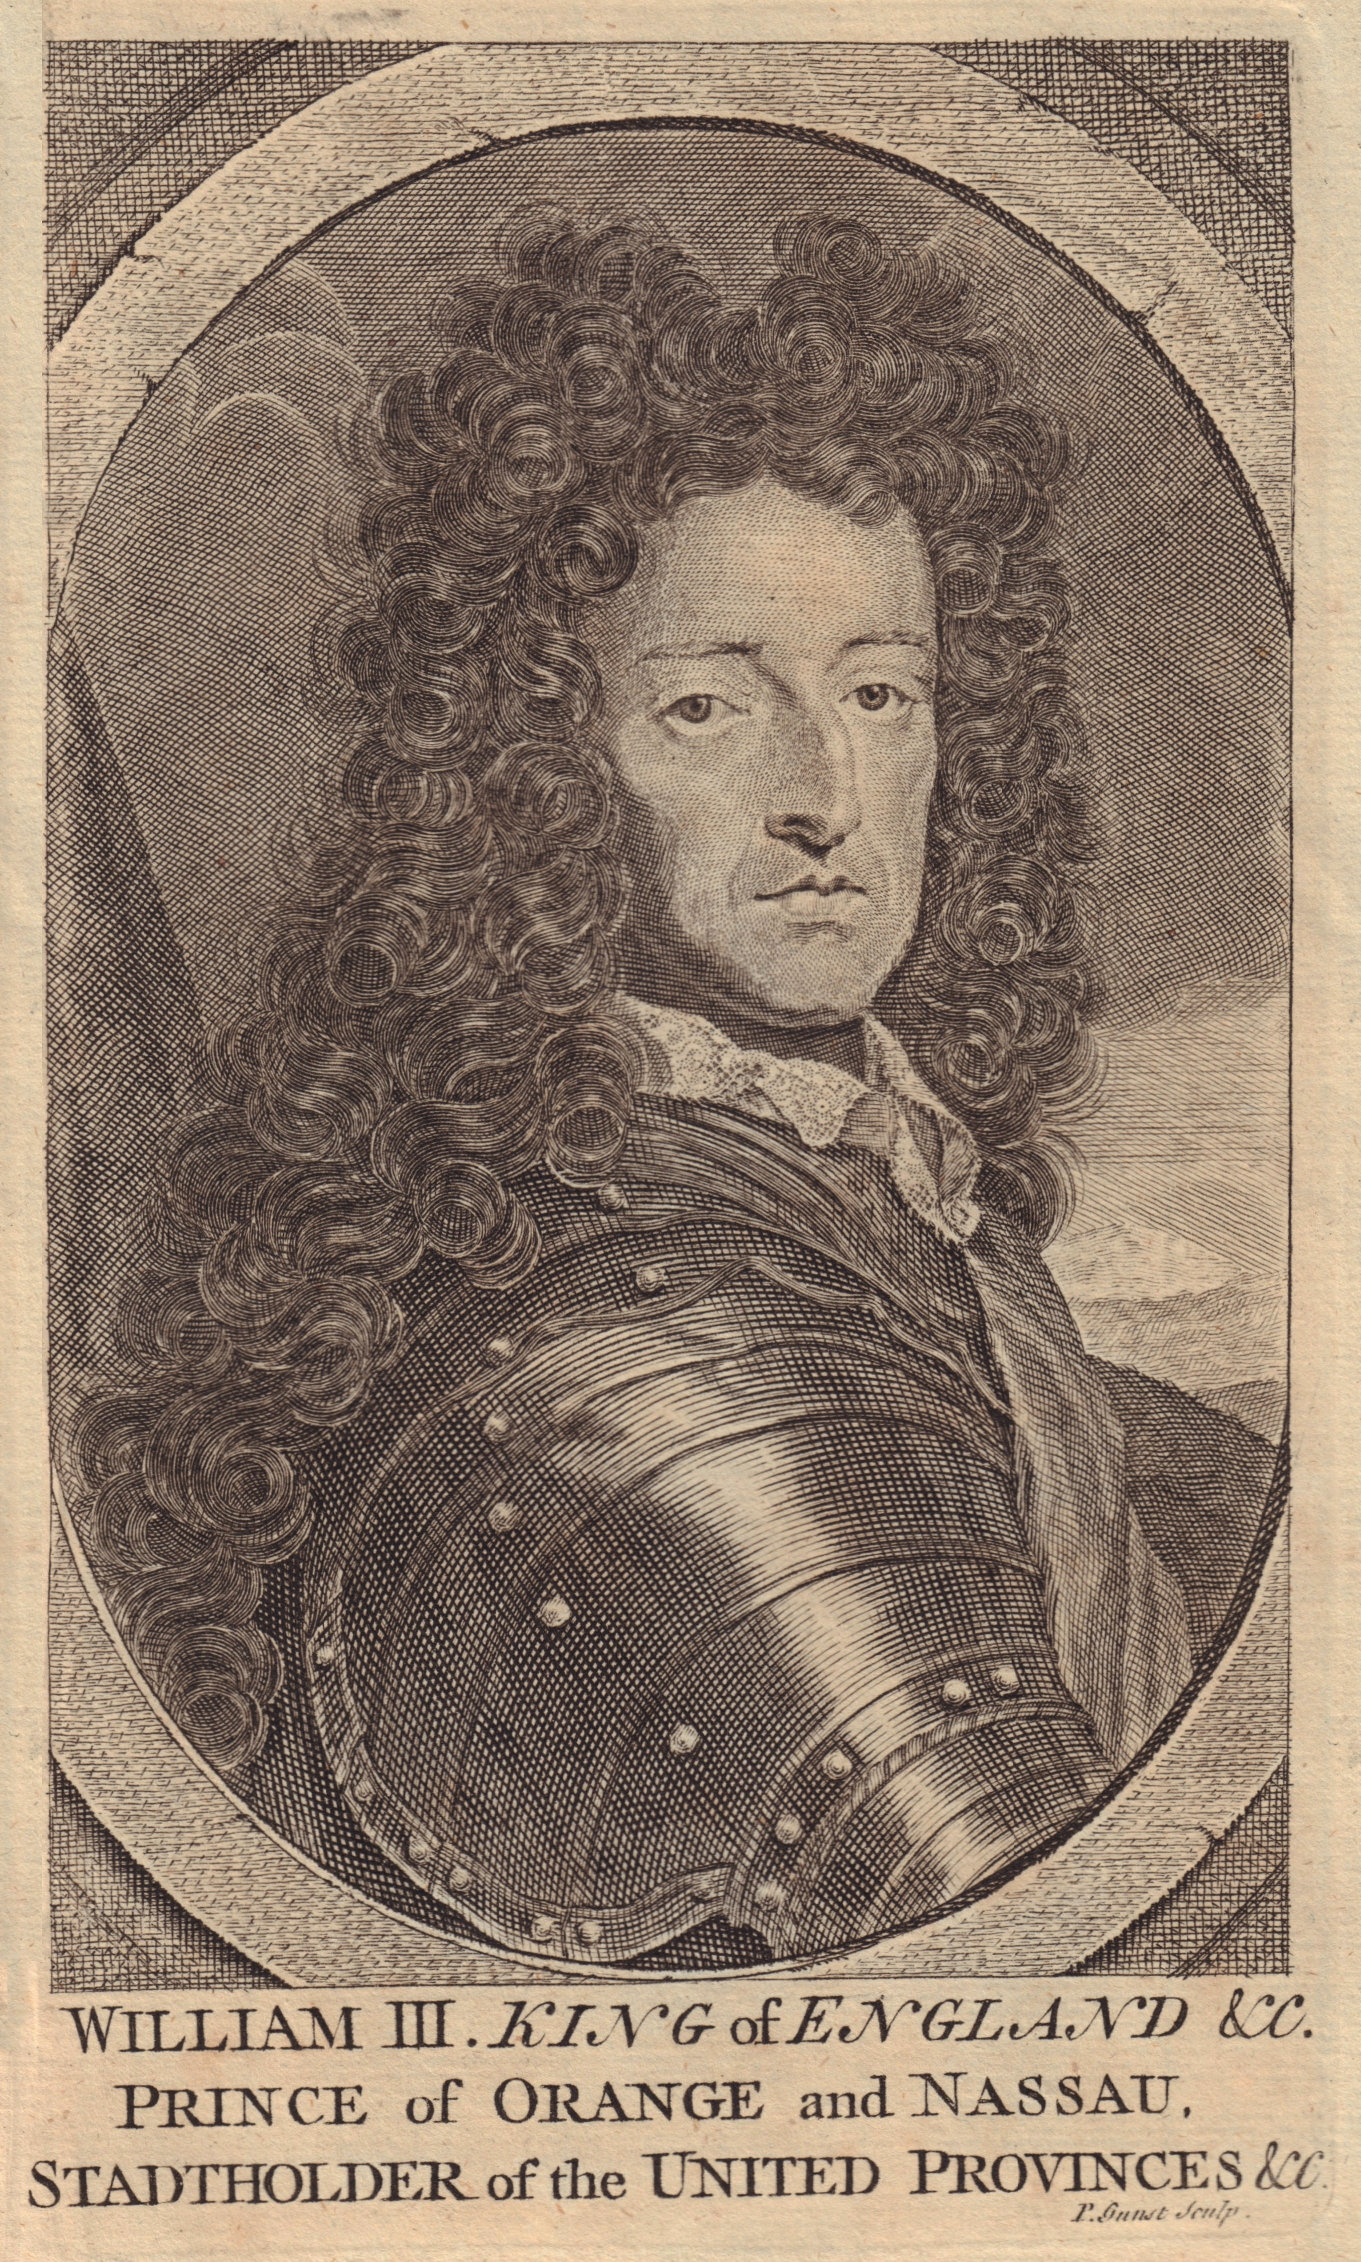 Associate Product King William III Prince of Orange and Nassau. United Provinces Stadtholder 1747